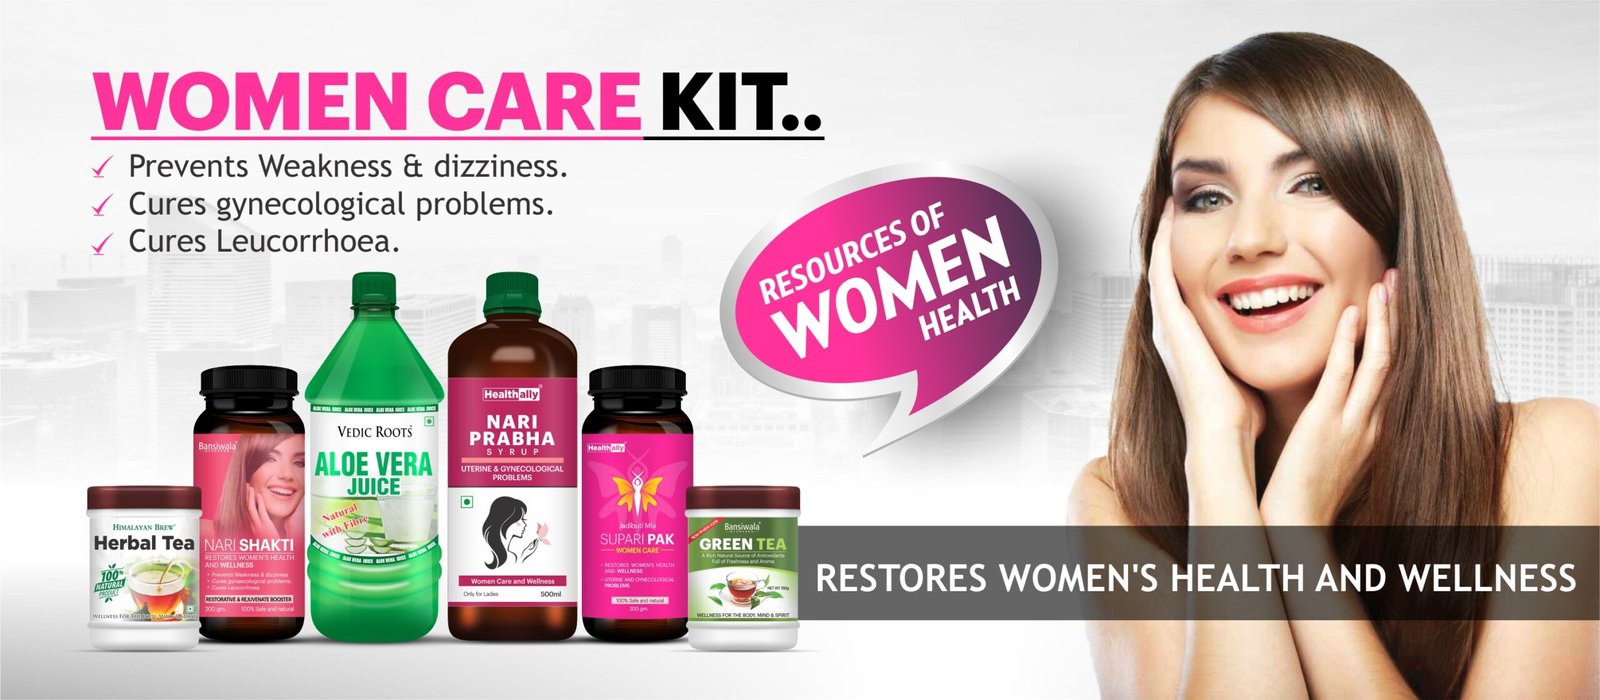 women care kit - 1